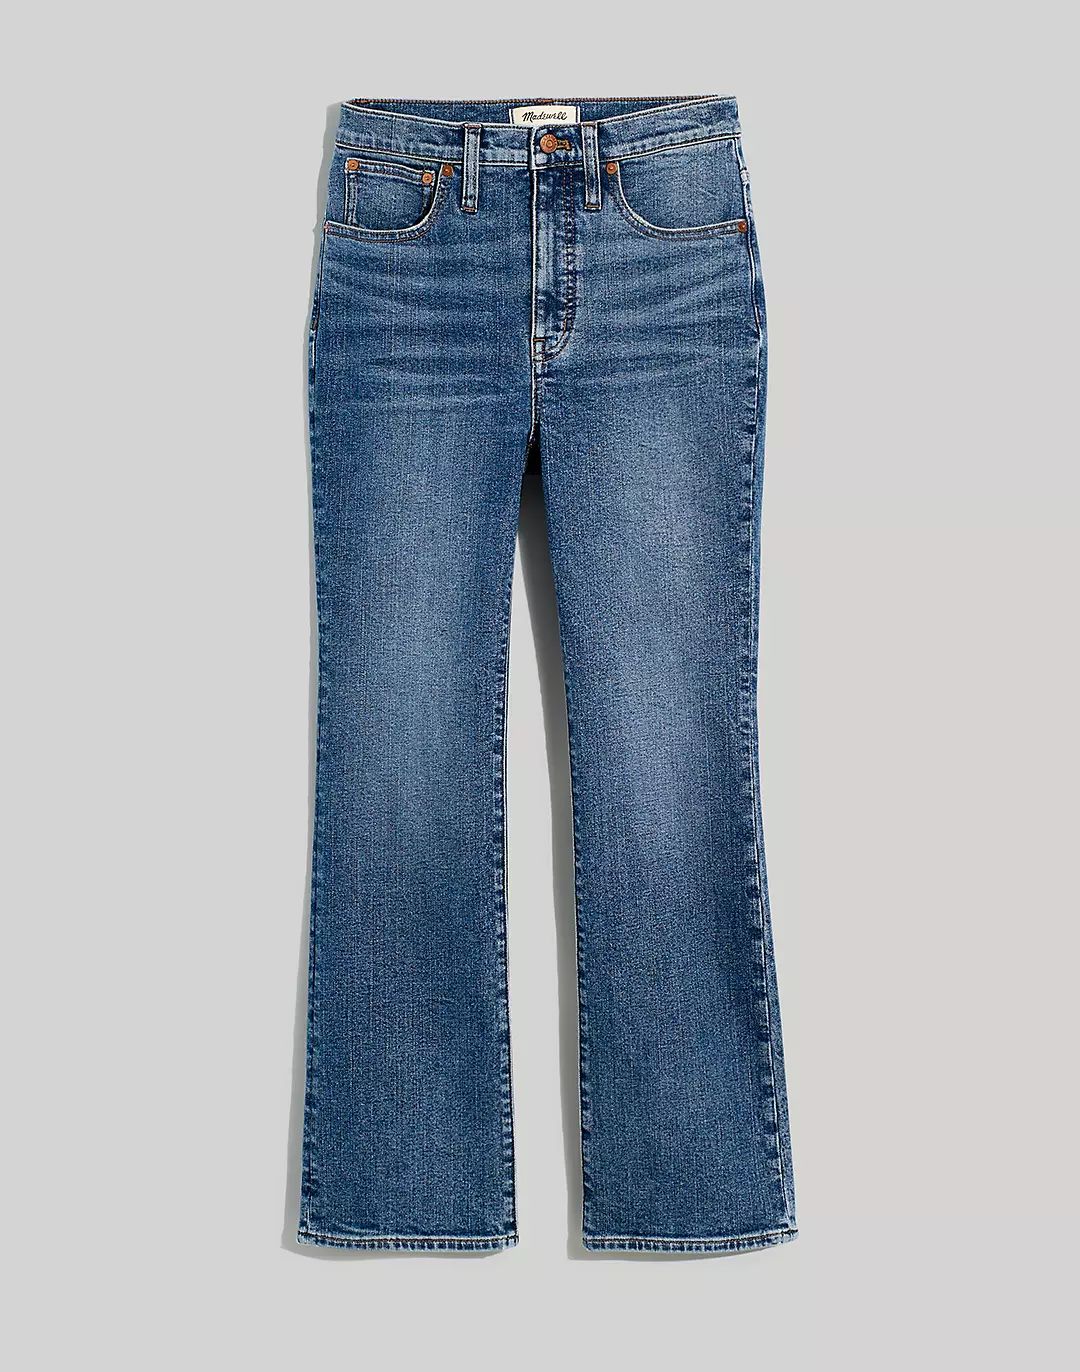 Plus Cali Demi-Boot Jeans in Glenside Wash | Madewell